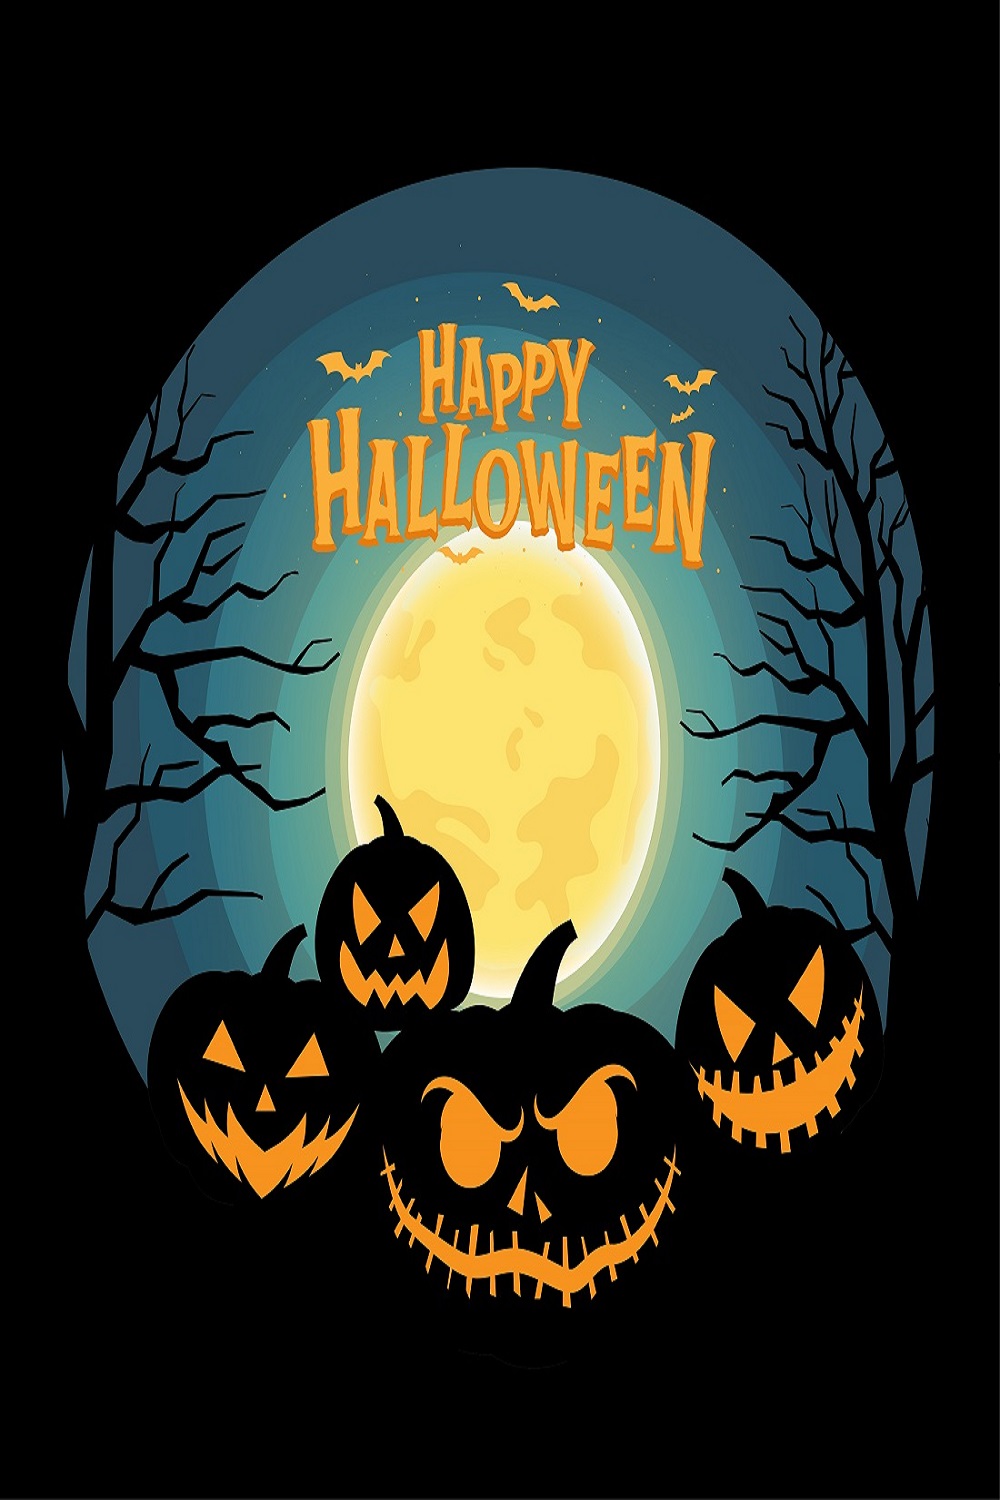 Happy Halloween Design pinterest preview image.